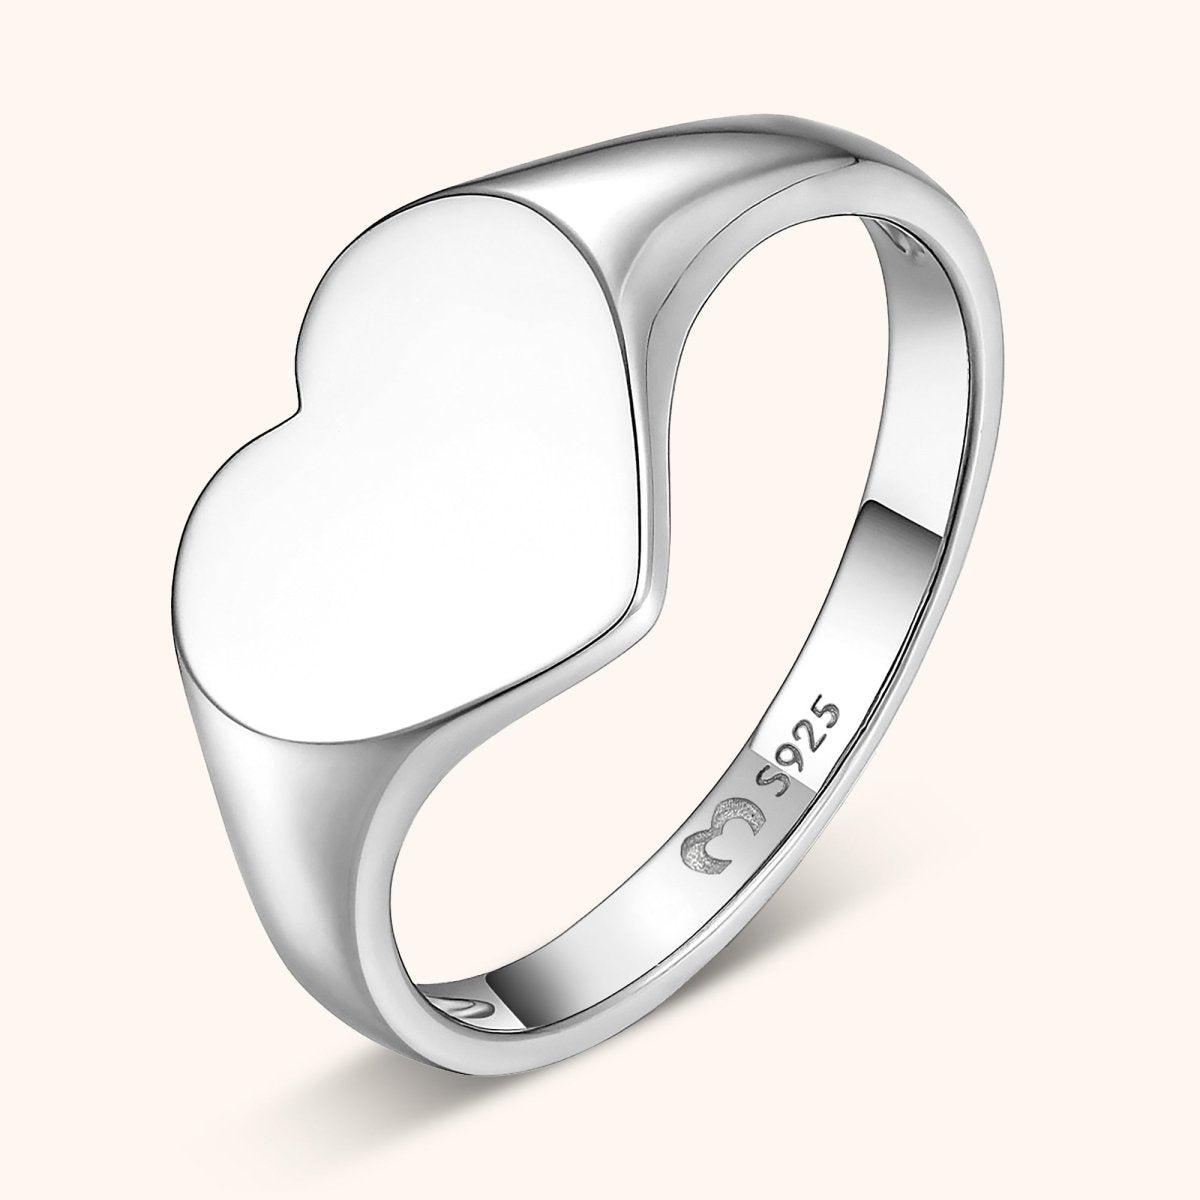 "Loving Heart" Ring - Milas Jewels Shop